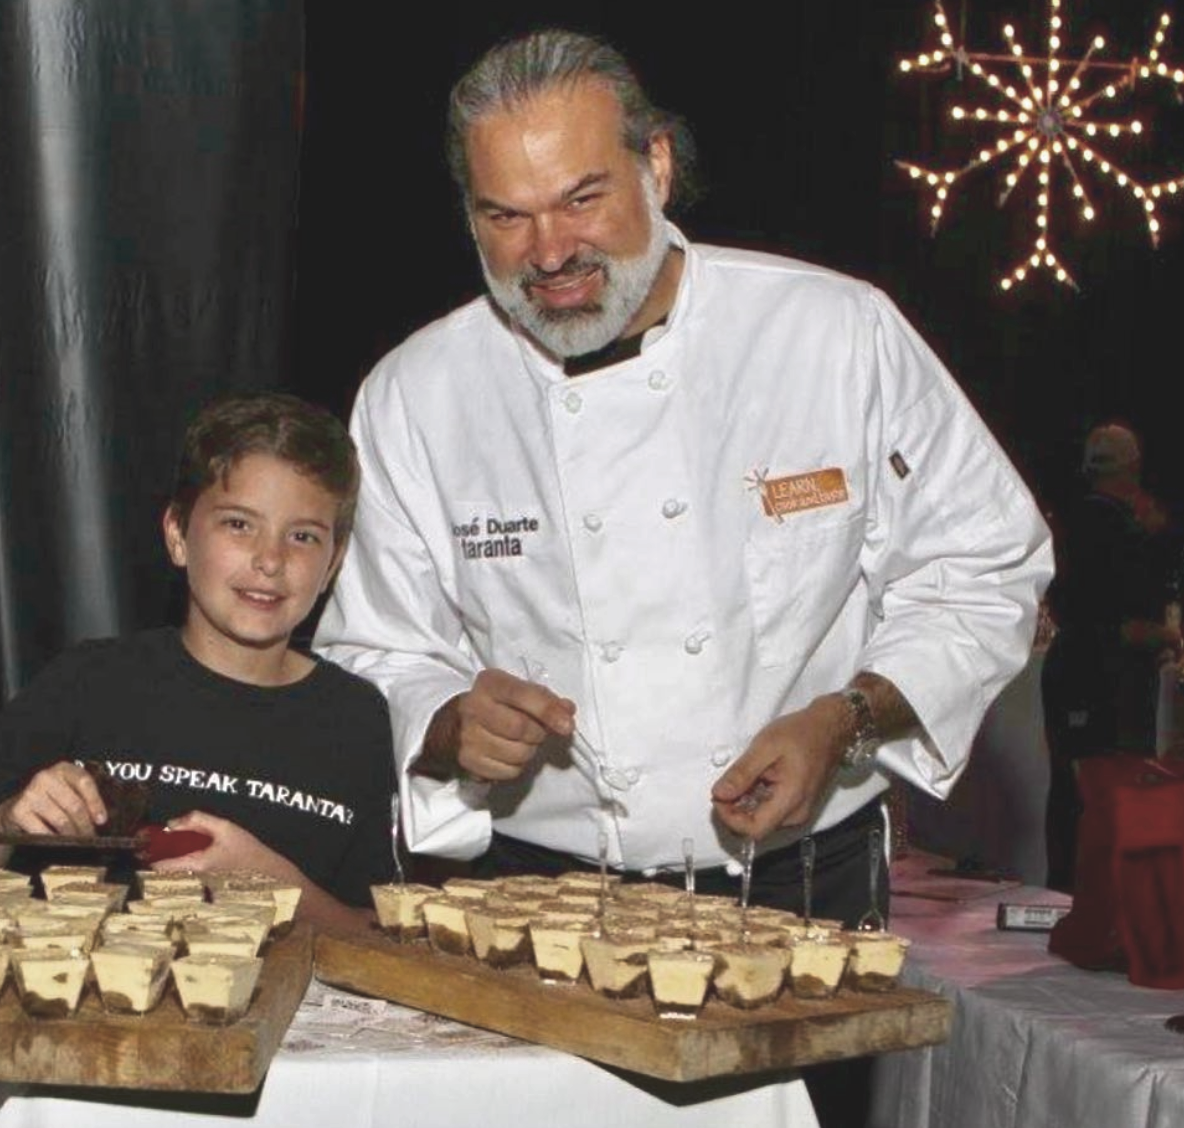 chef owner jose duarte with his son Diego serving tiramisu